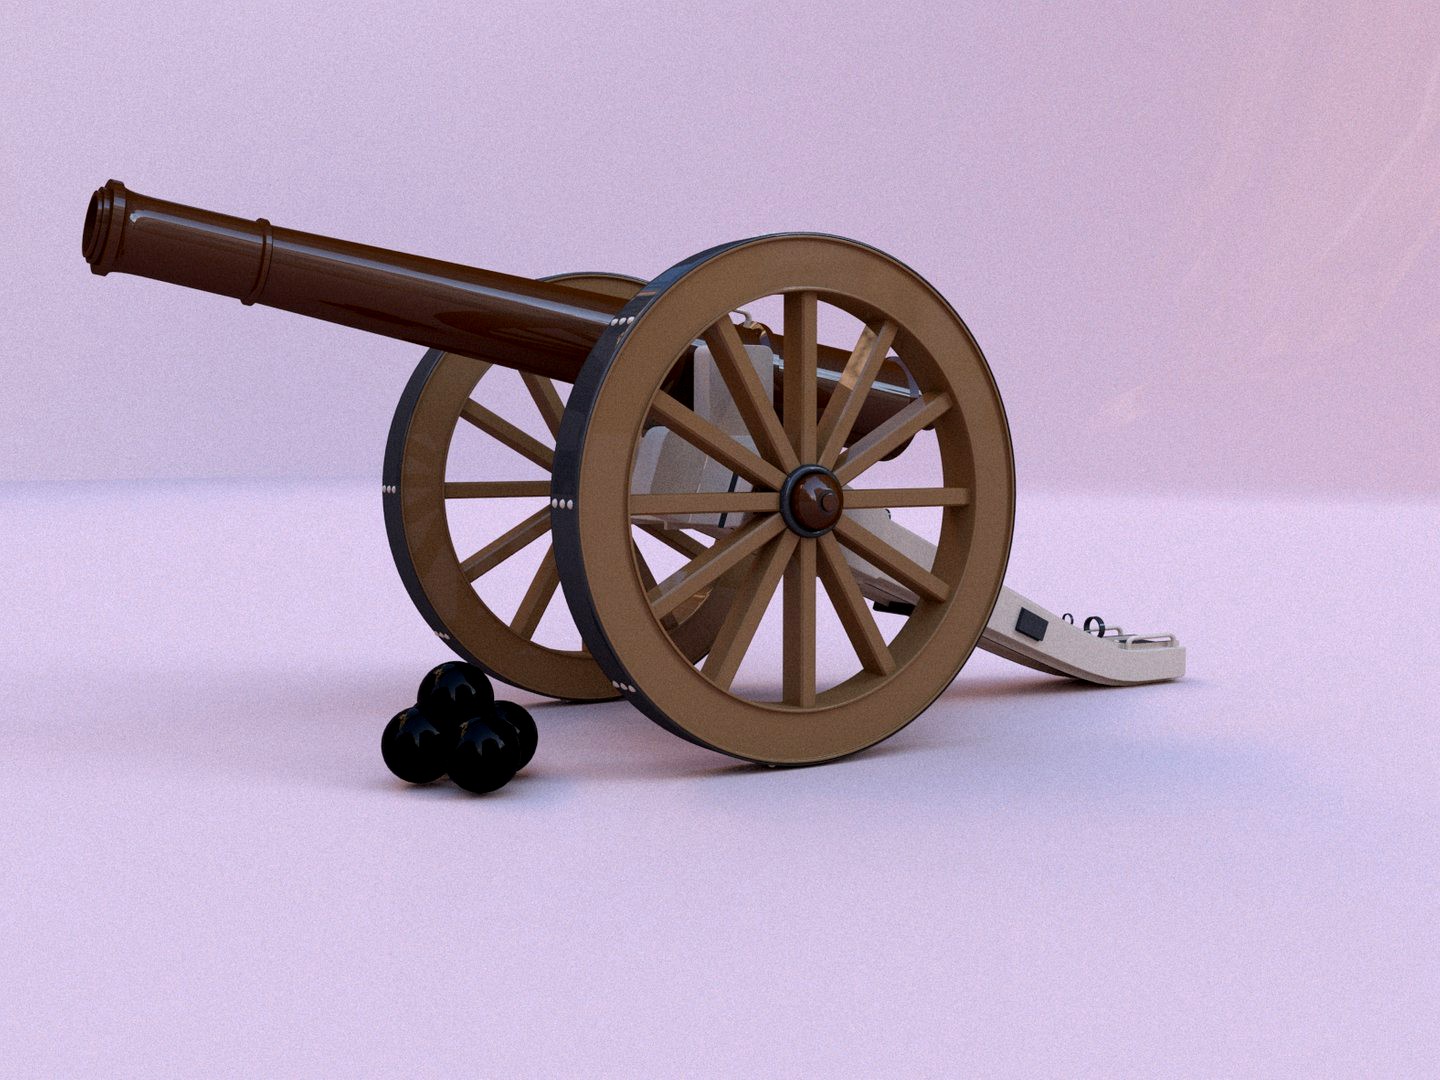 Field Cannon